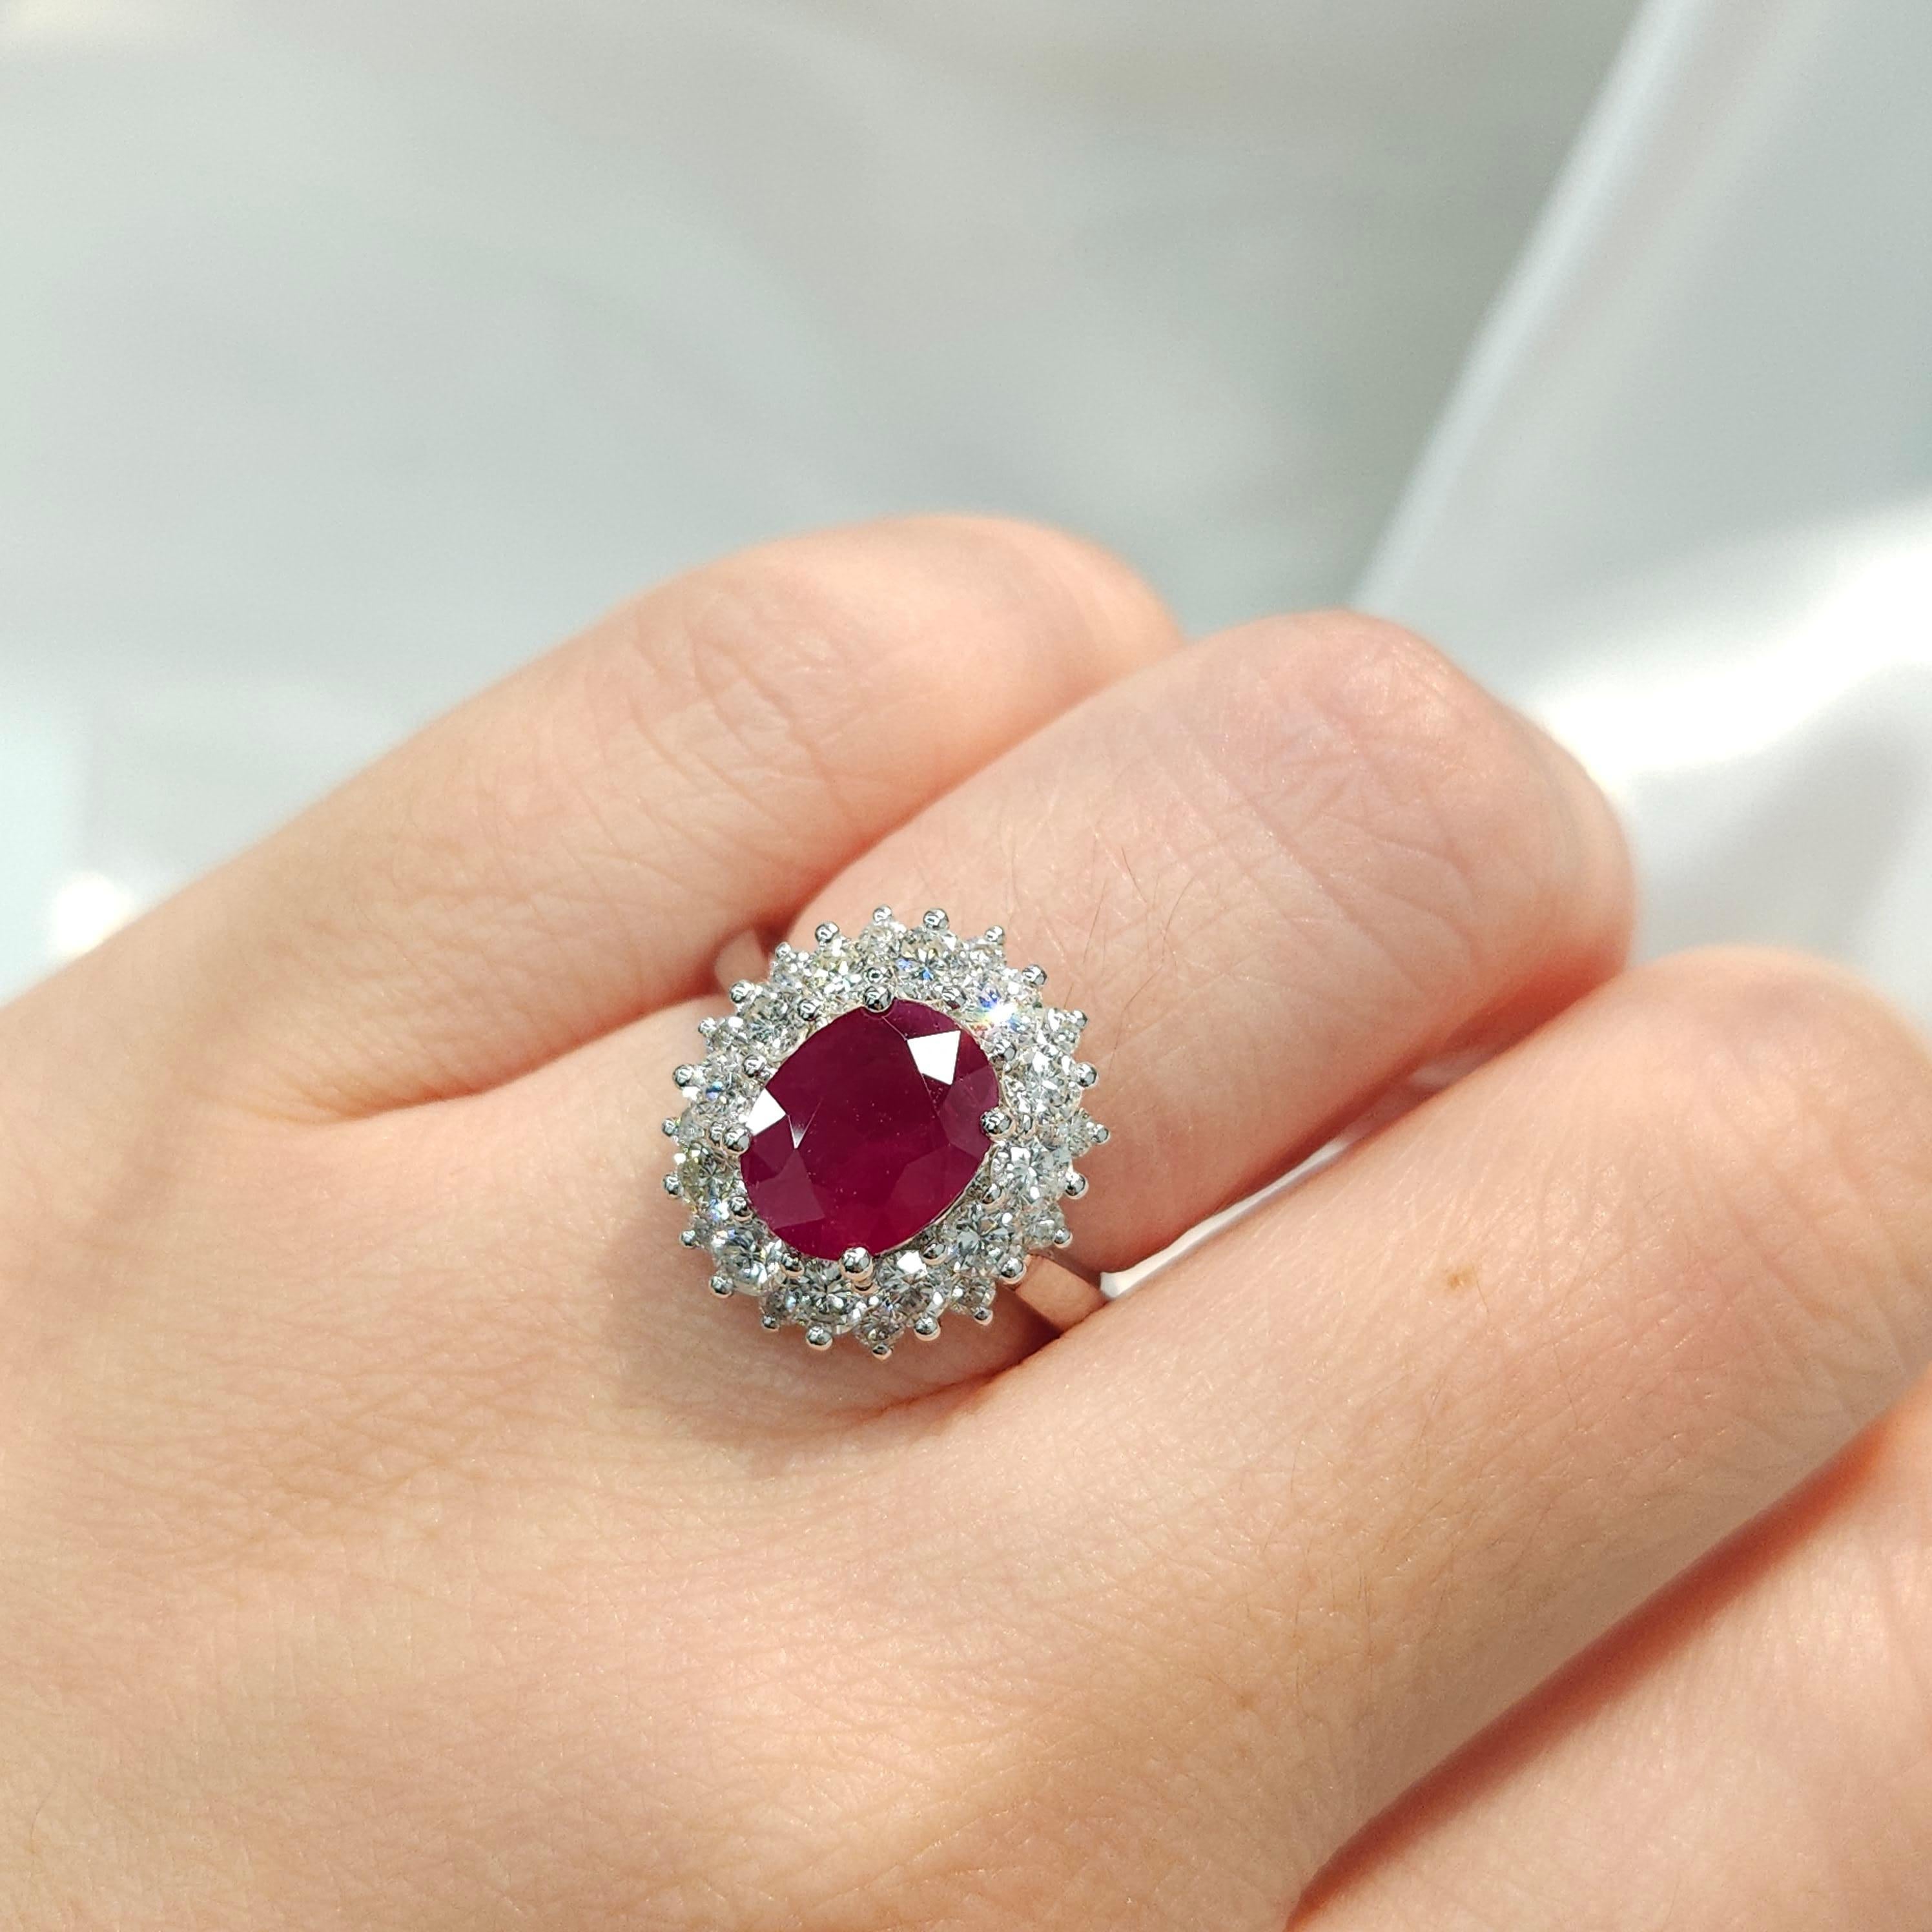 IGI Certified 2.40 Carat Burma Ruby & 1.41 Carat Diamond Ring in 18K White Gold For Sale 3